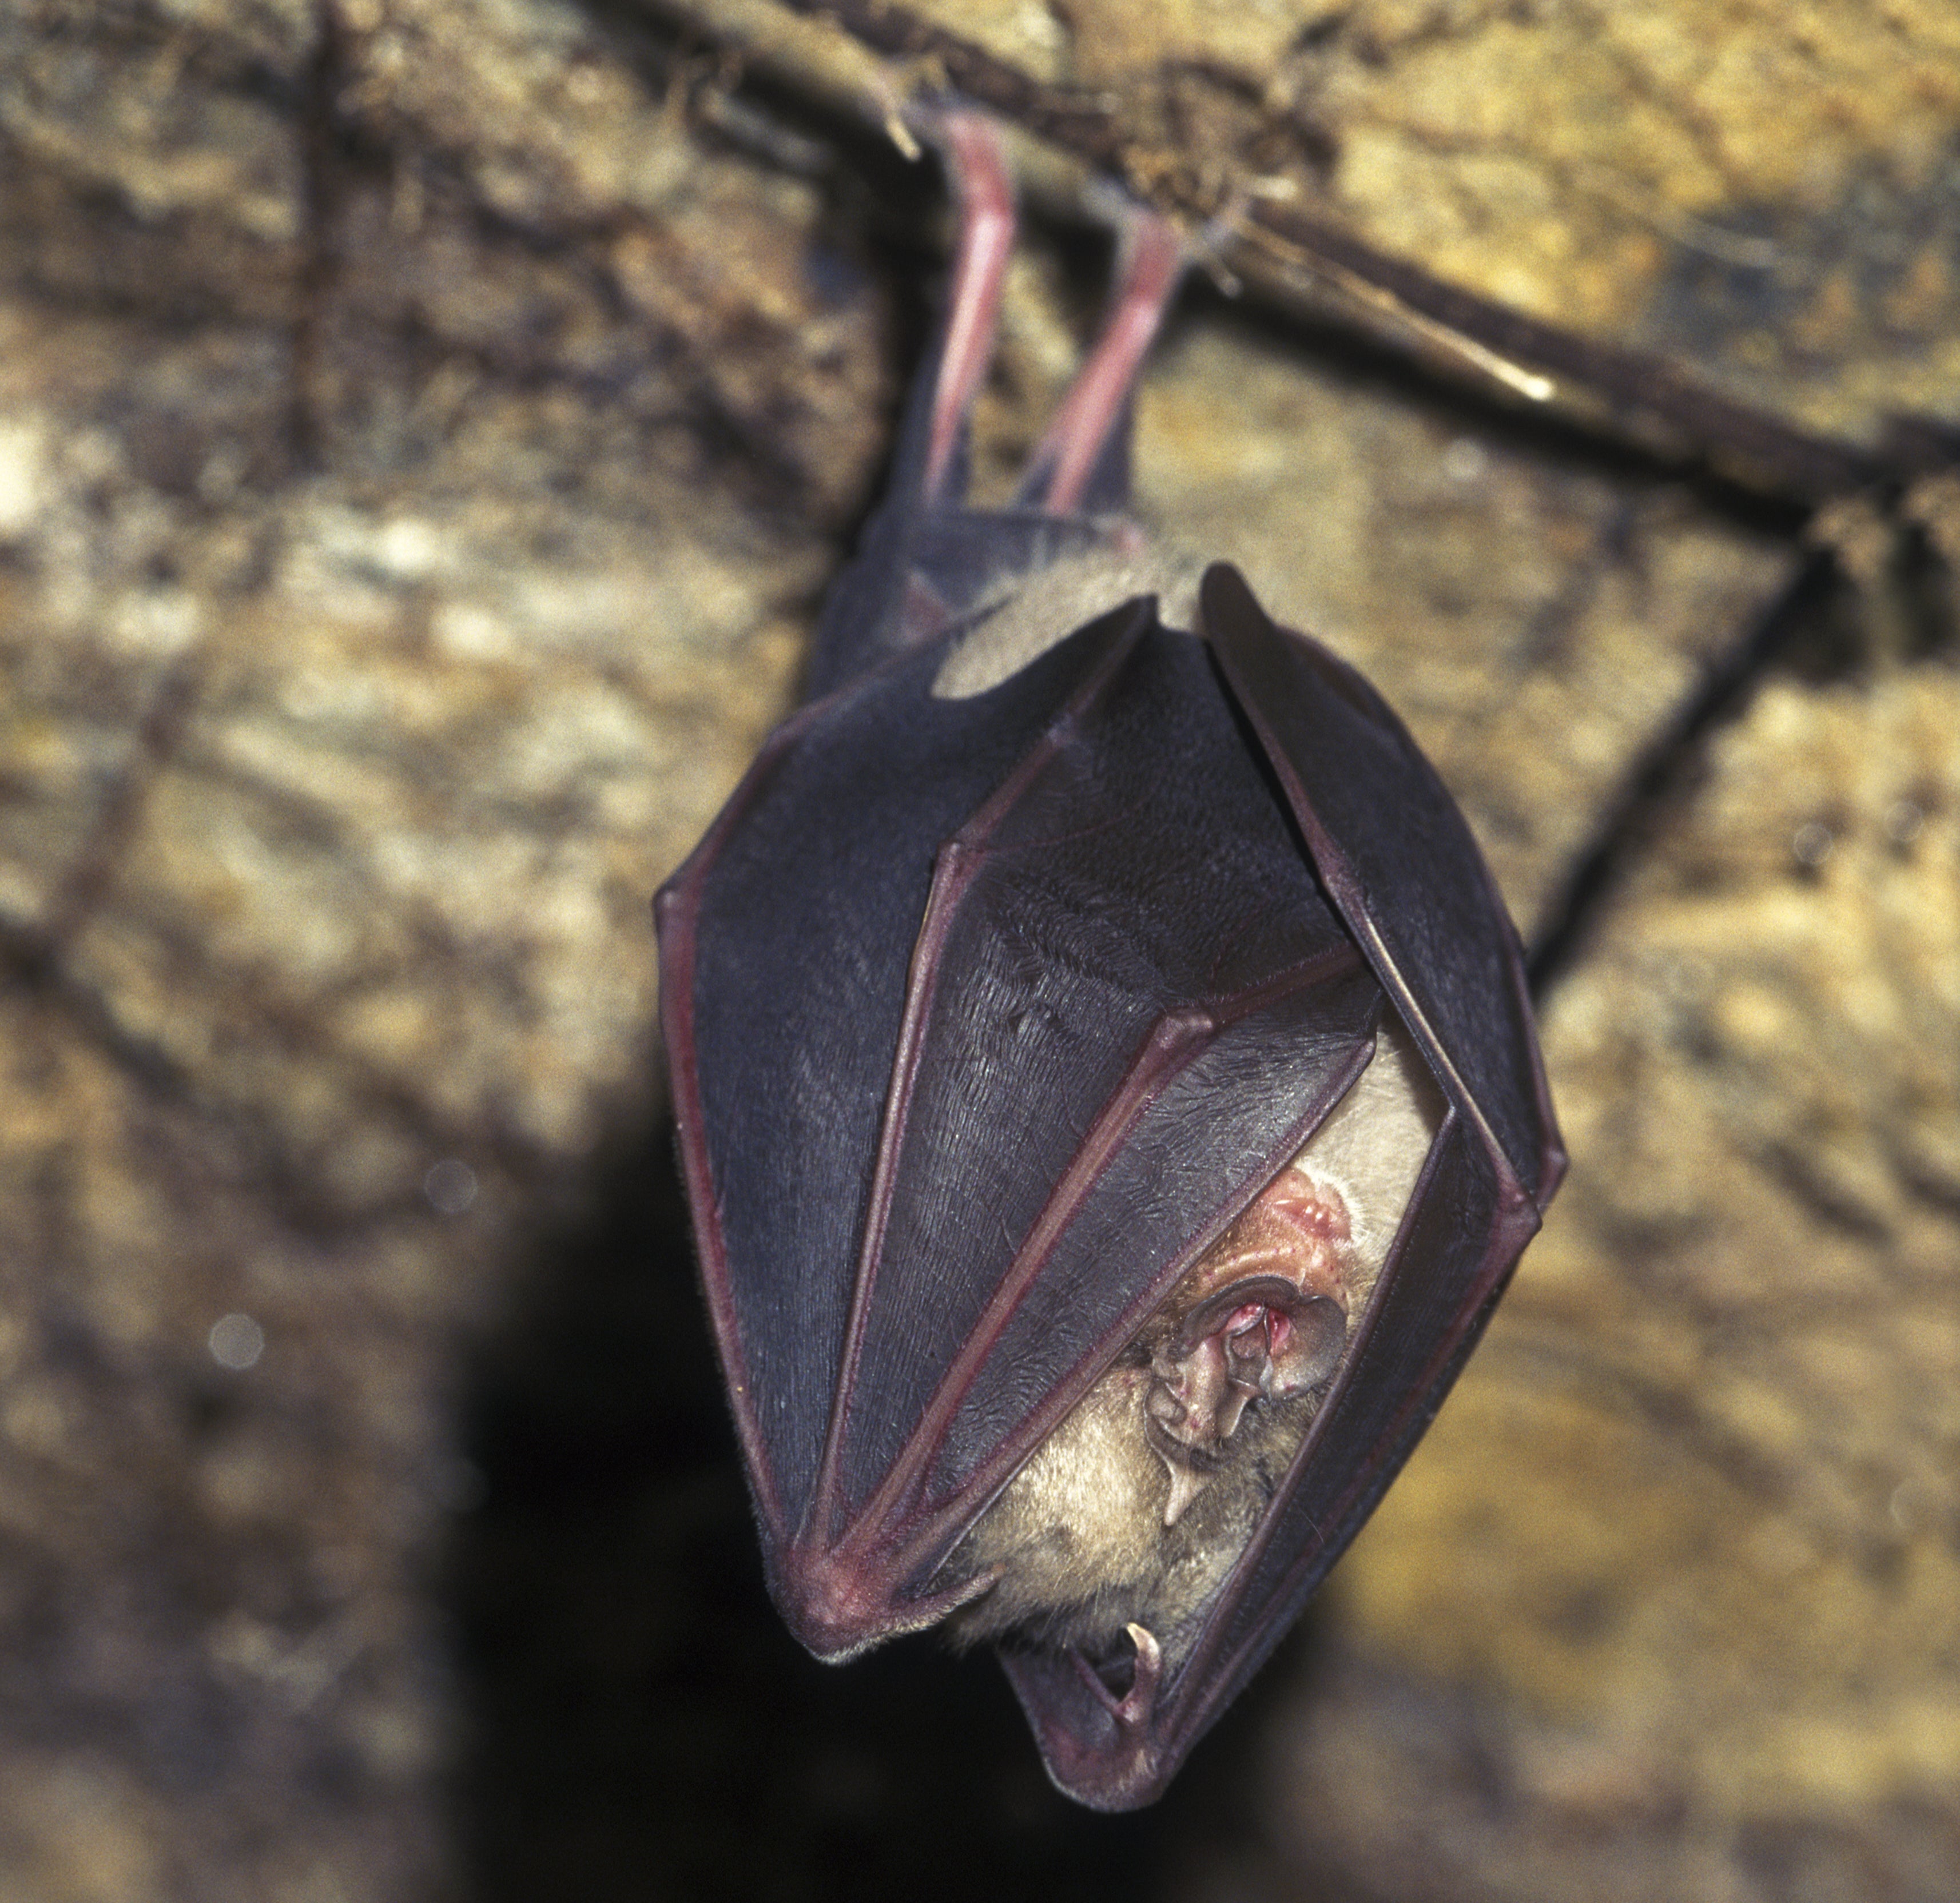 Greater Horseshoe bat hibernating in cave